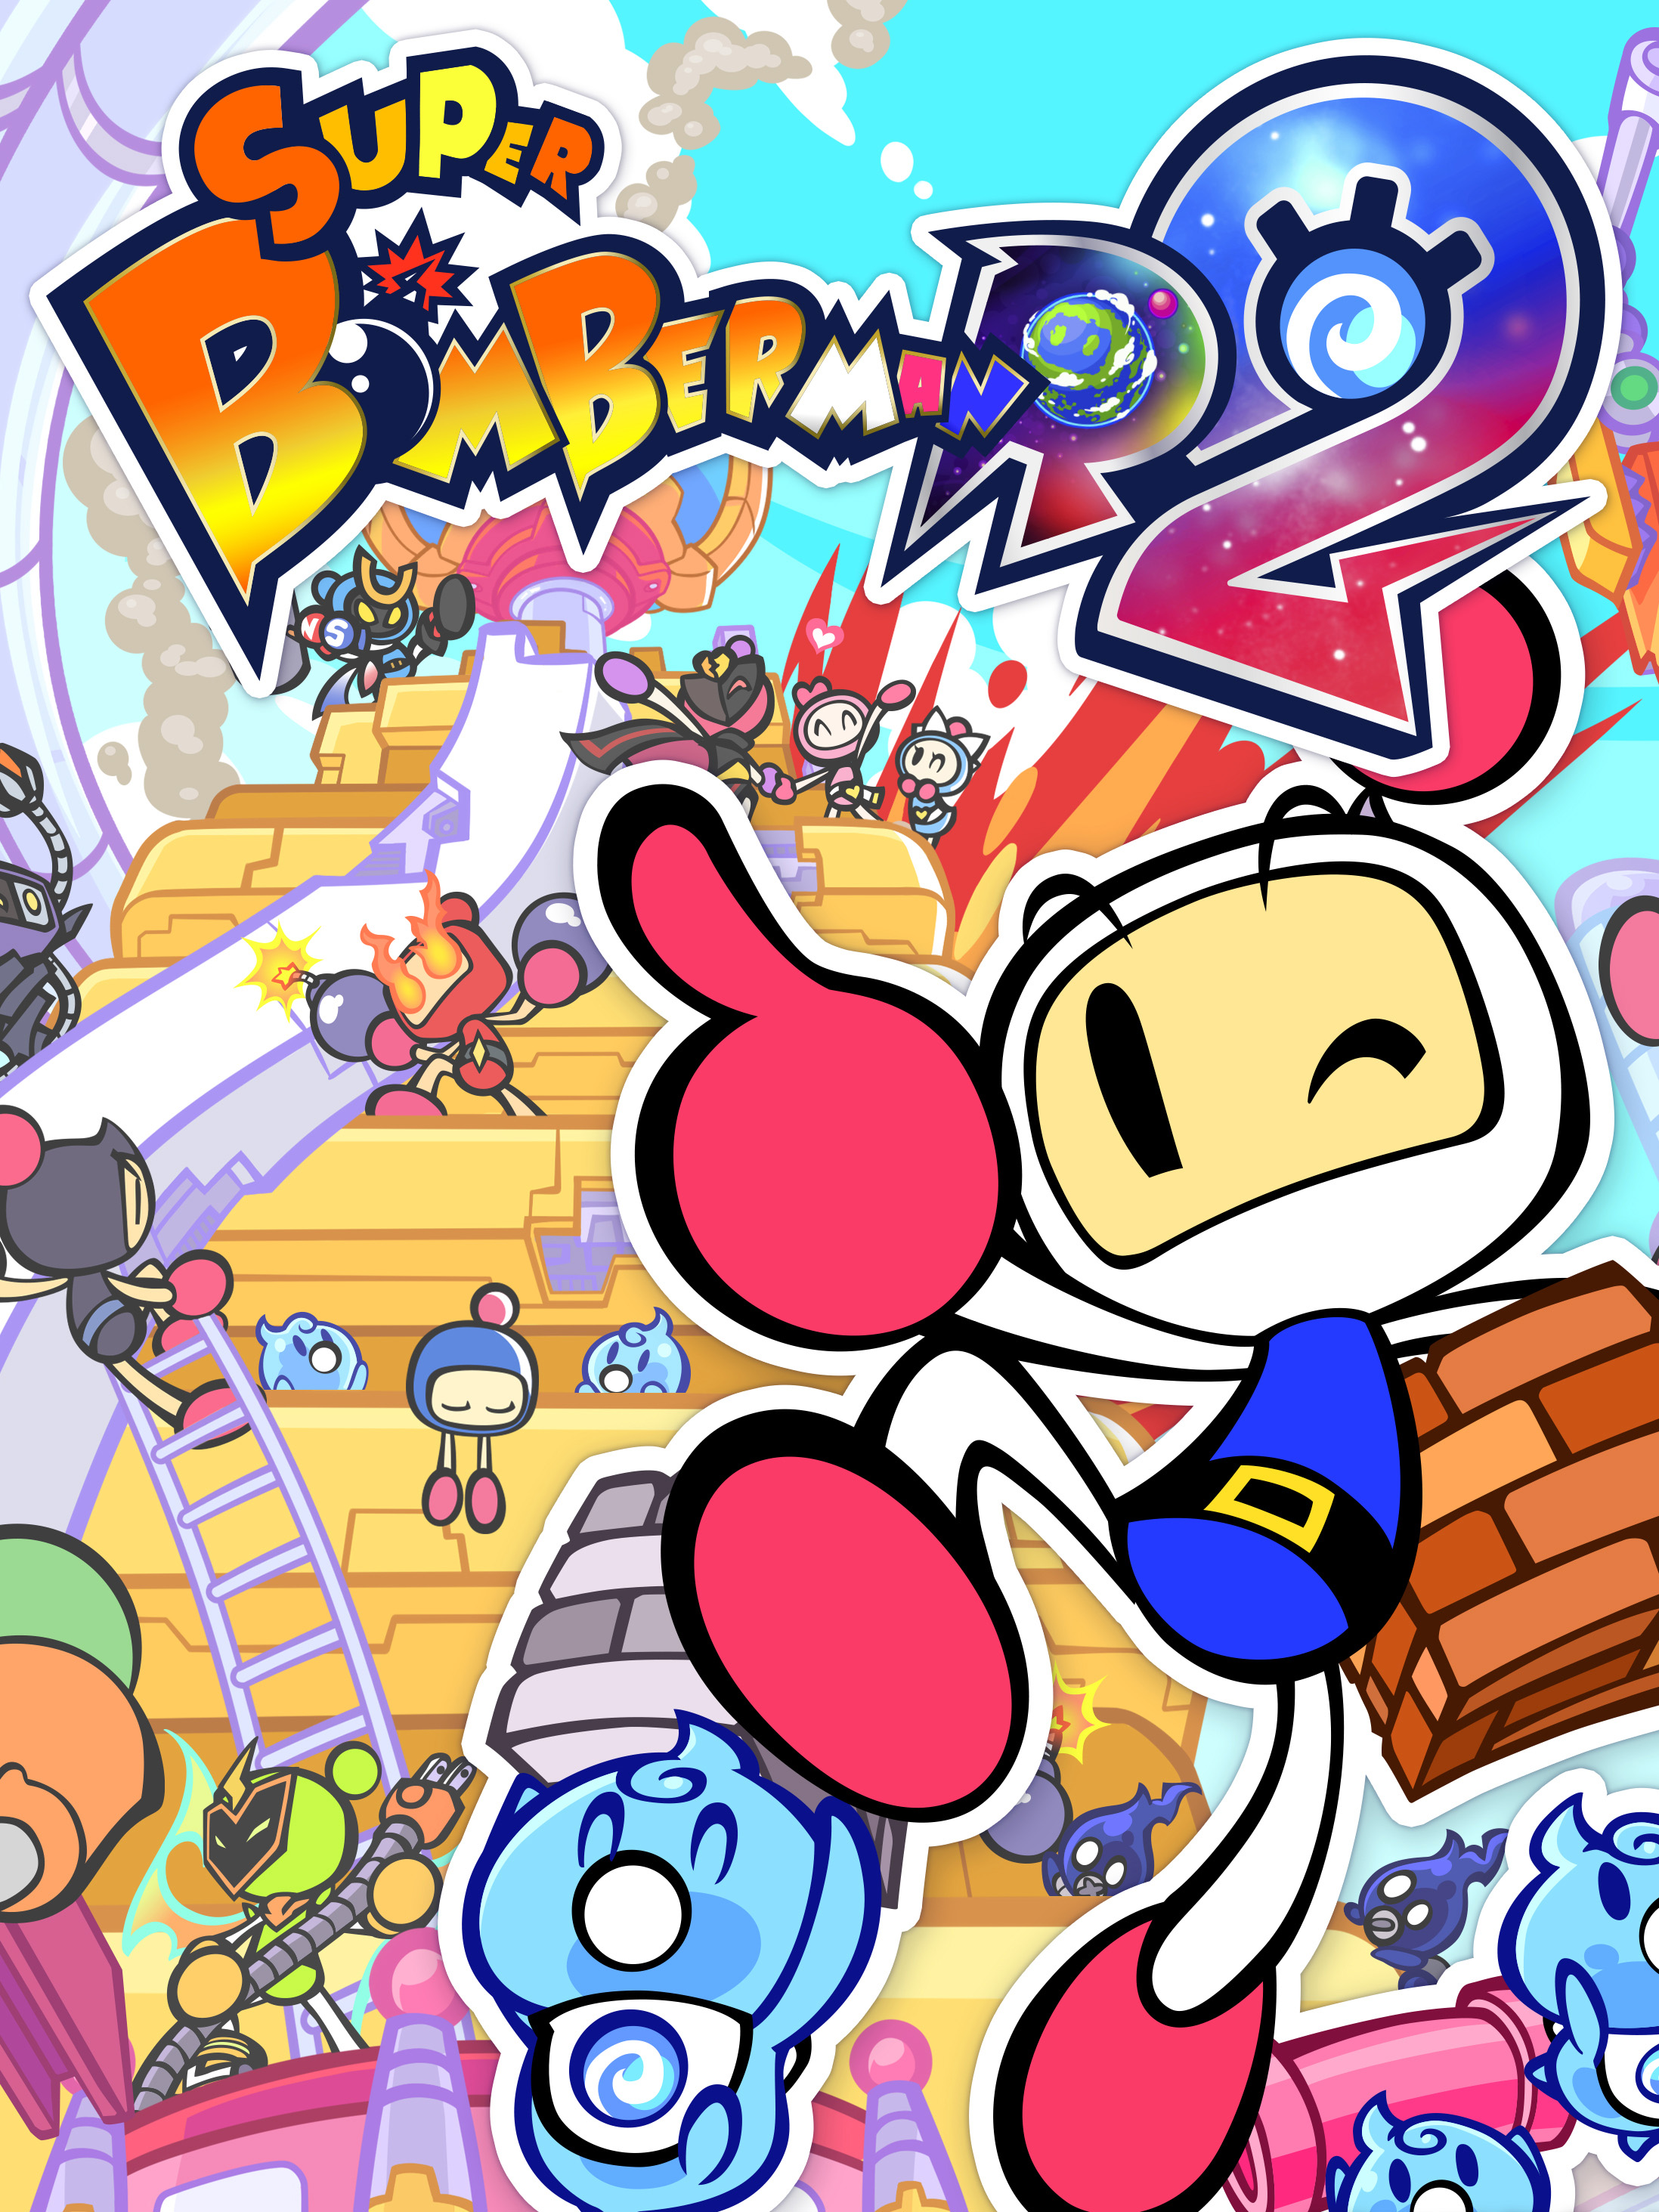 Super Bomberman R 2 announced for 2023 on Nintendo Switch